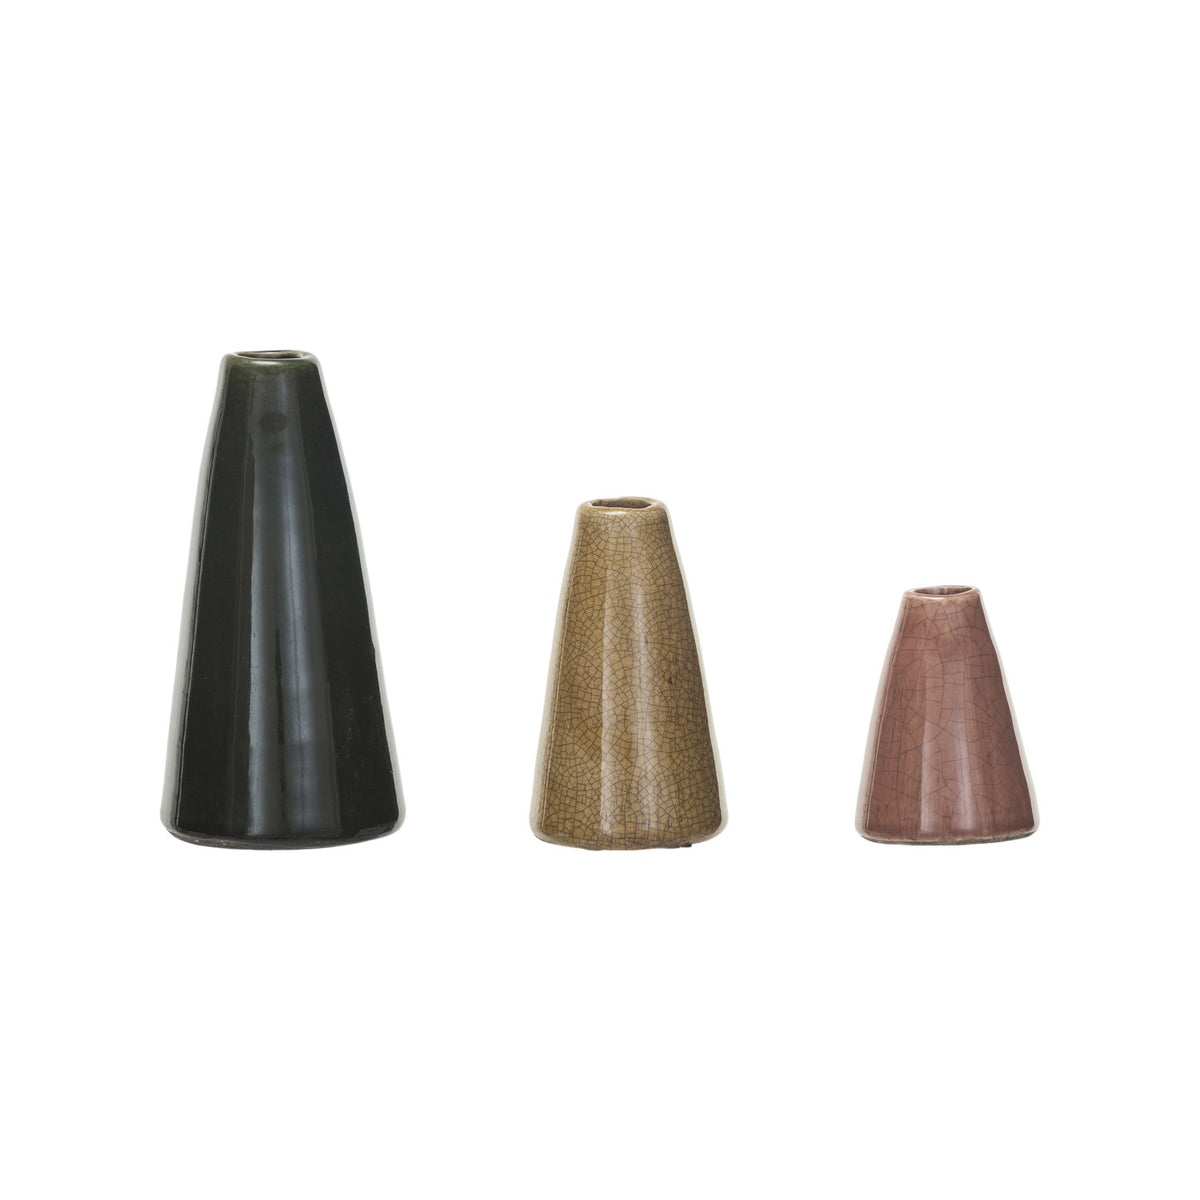 Terra-Cotta Vases, Crackle Glaze